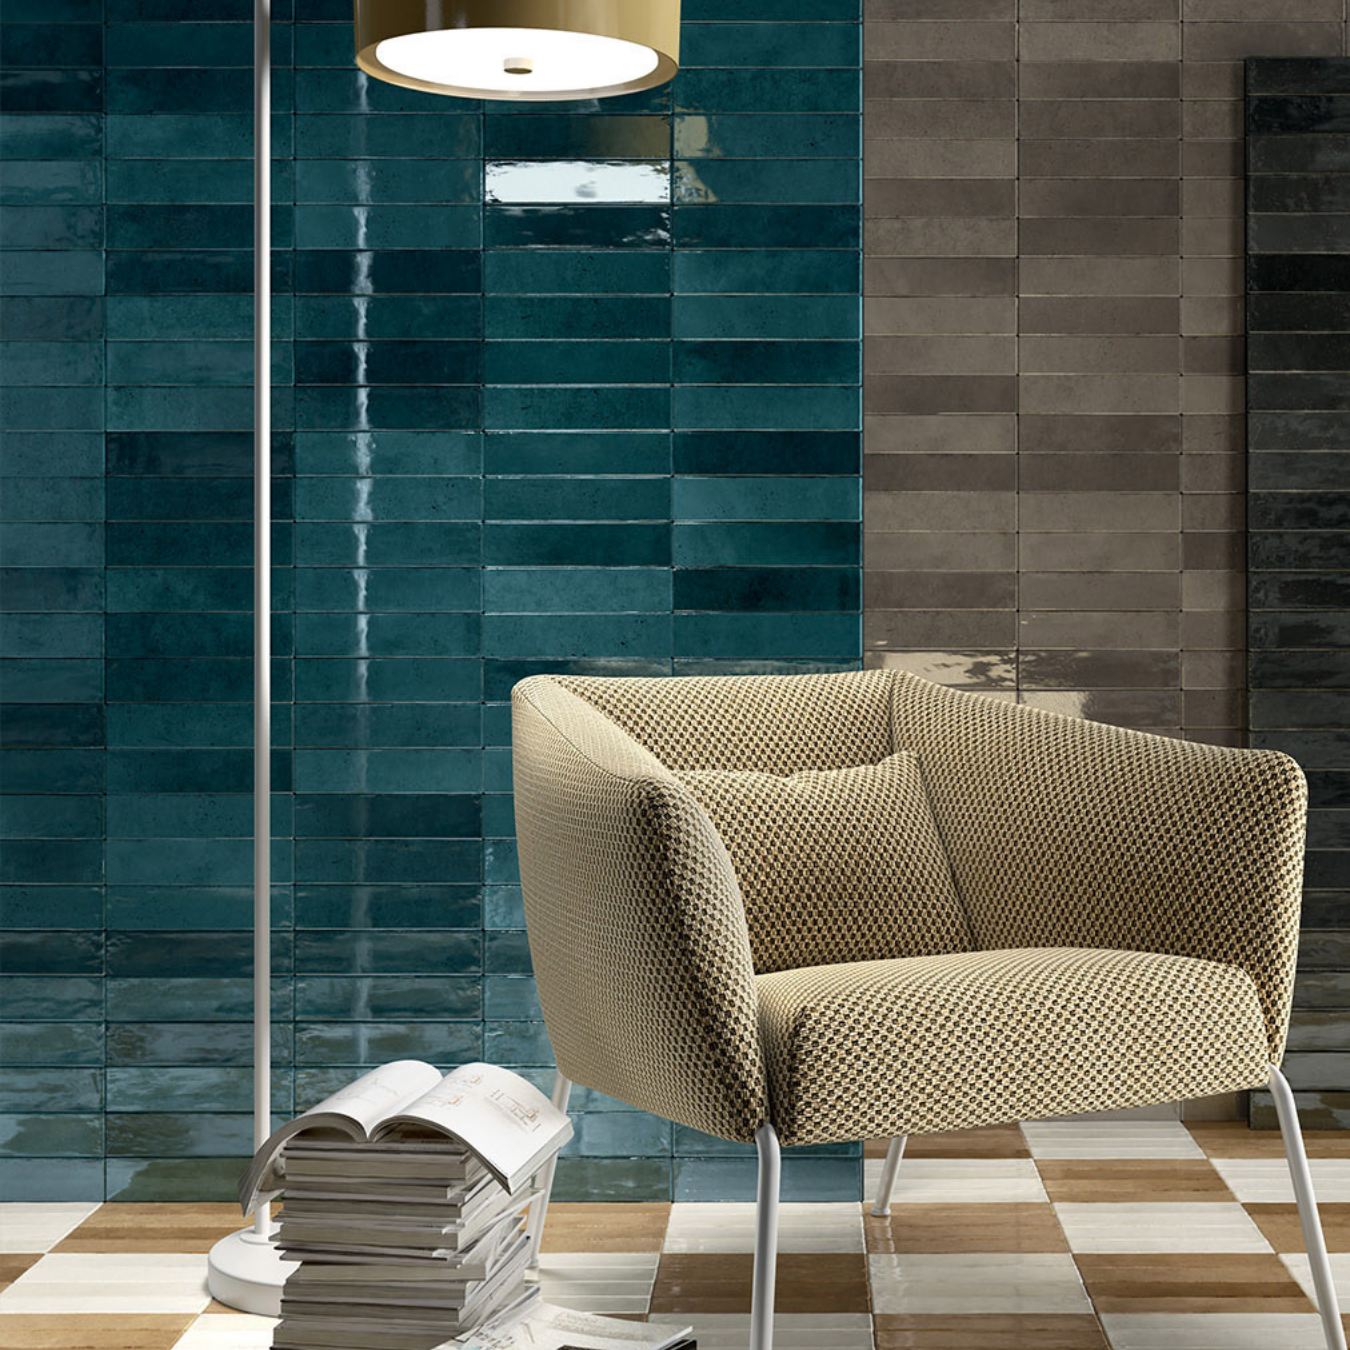 TTTD-PRC-STR Amore 2x10 Dark Blue Handmade Bright Porcelain Wall Floor Tile Backsplash for Kitchen, Bathroom, Fireplace, Accent Decor, Made in Italy